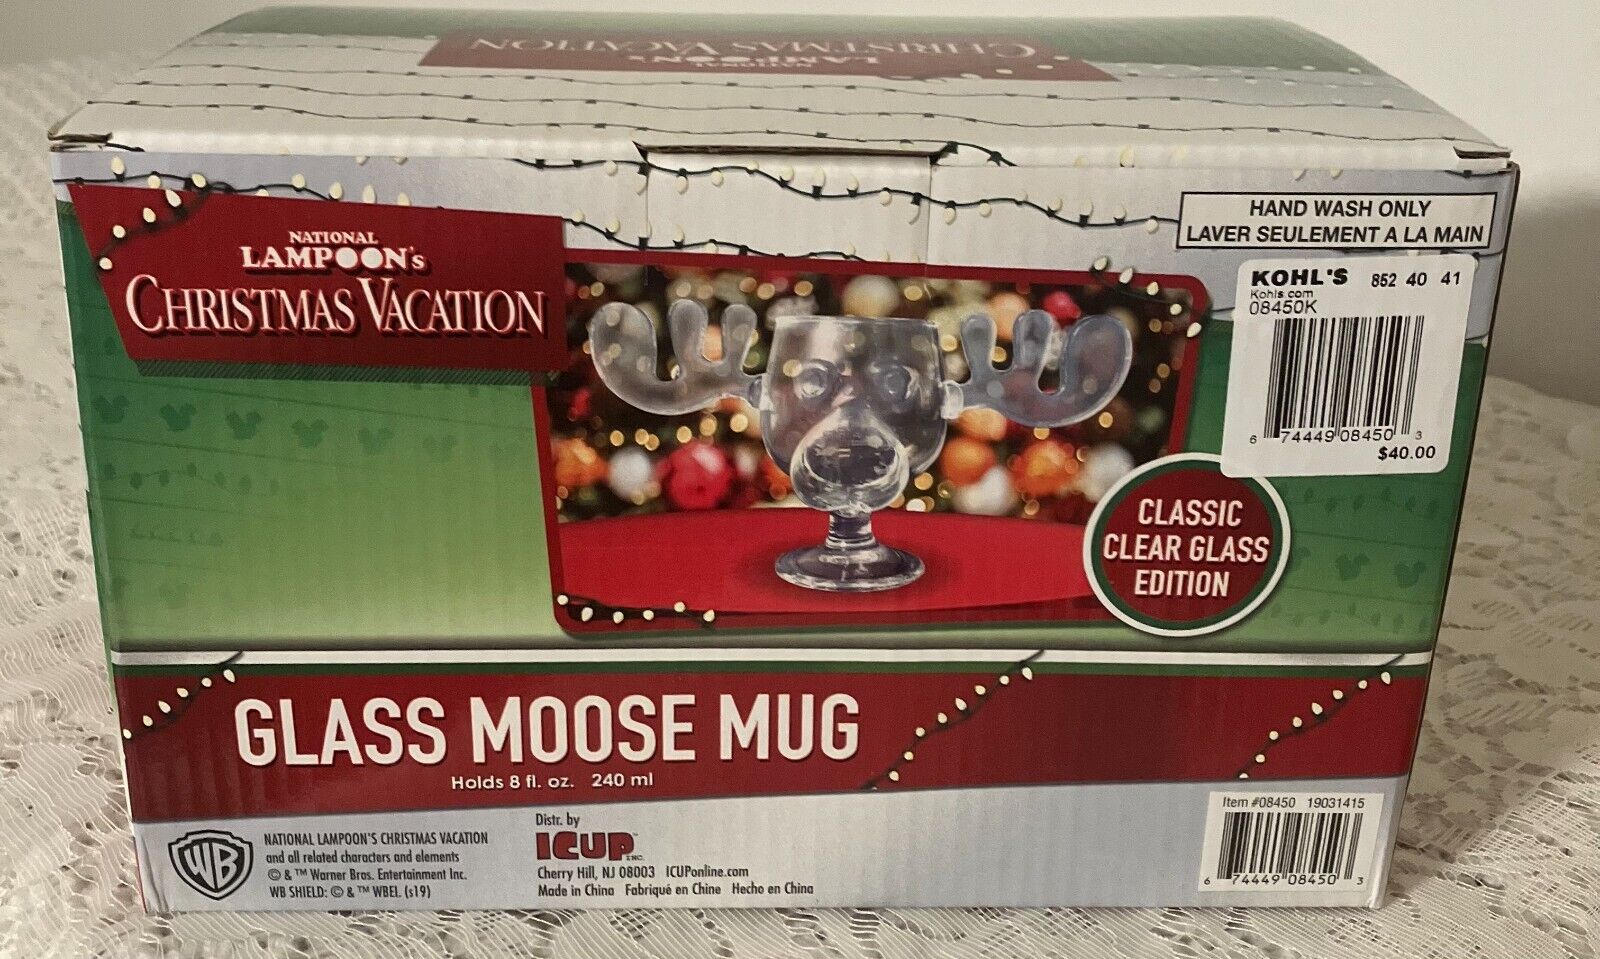 National Lampoons Christmas Vacation 8 oz. Moose Mug Classic Clear Glass Edition